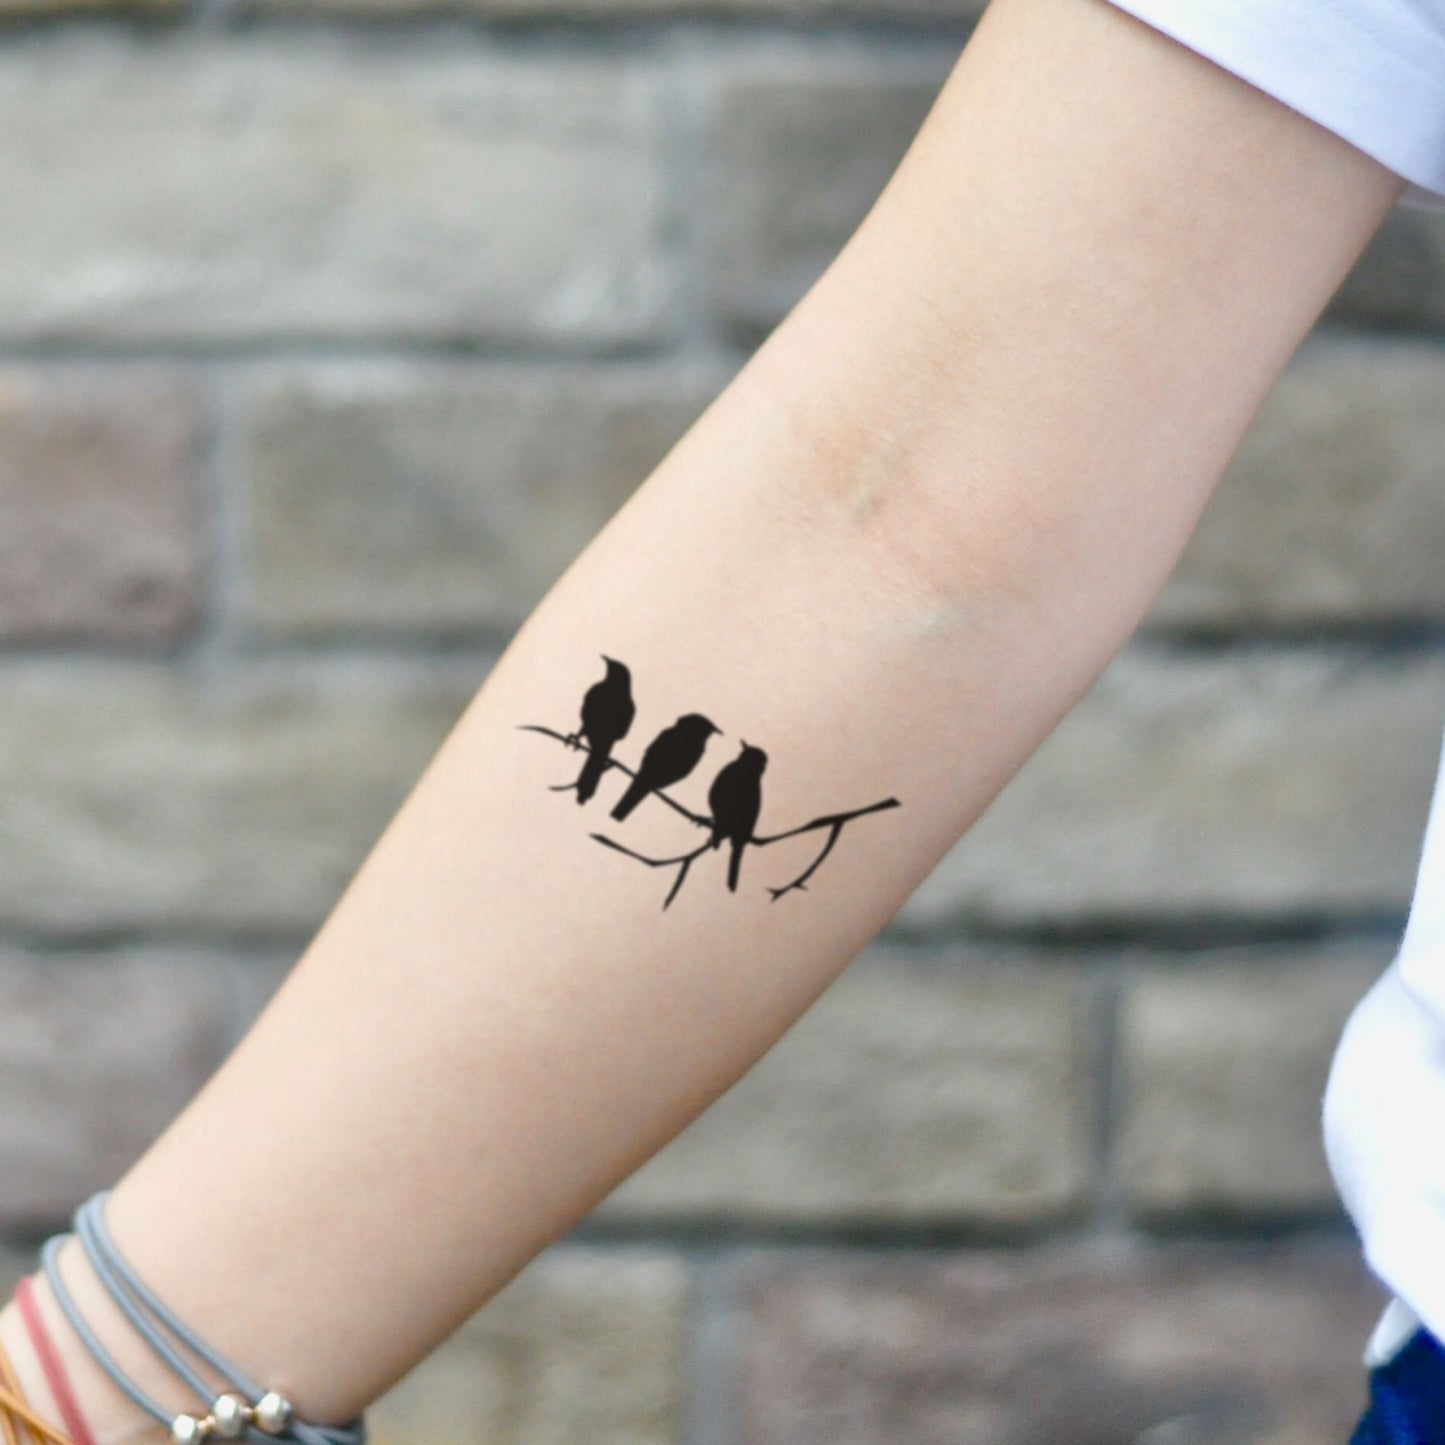 fake small three little birds animal temporary tattoo sticker design idea on inner arm